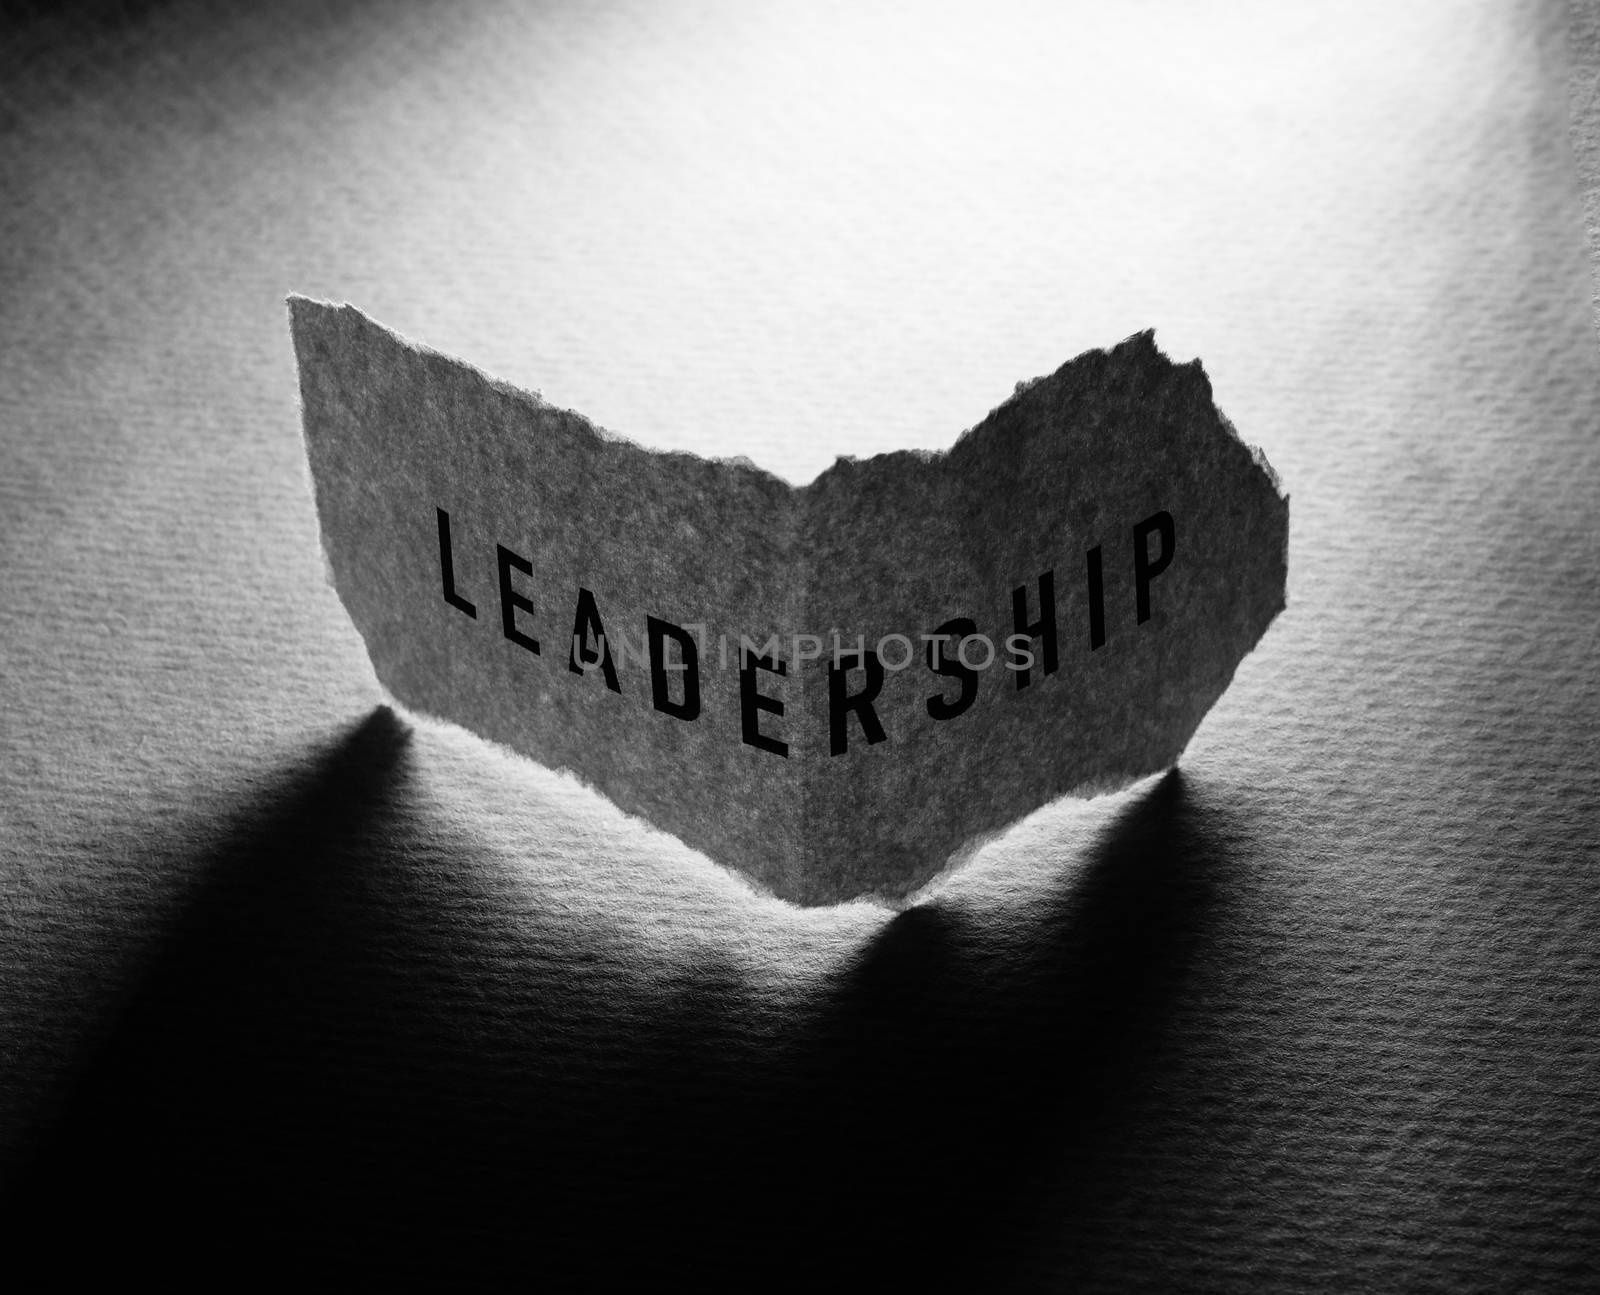 Leadership Word paper Tag by janaka